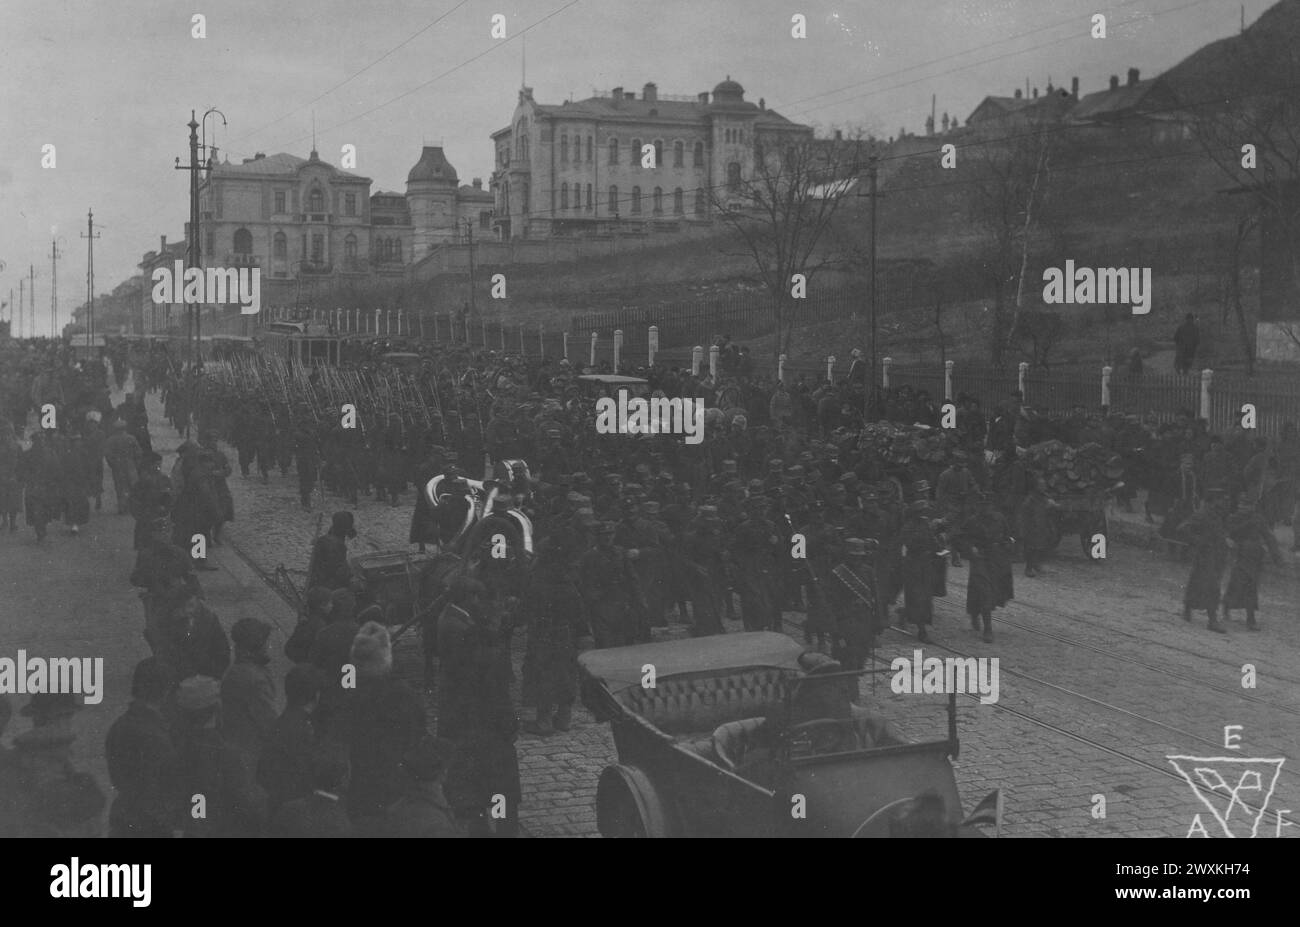 Czecho-slovak troops on parade, Vladivostock, Russia, Siberia ca. December 1919 Stock Photo